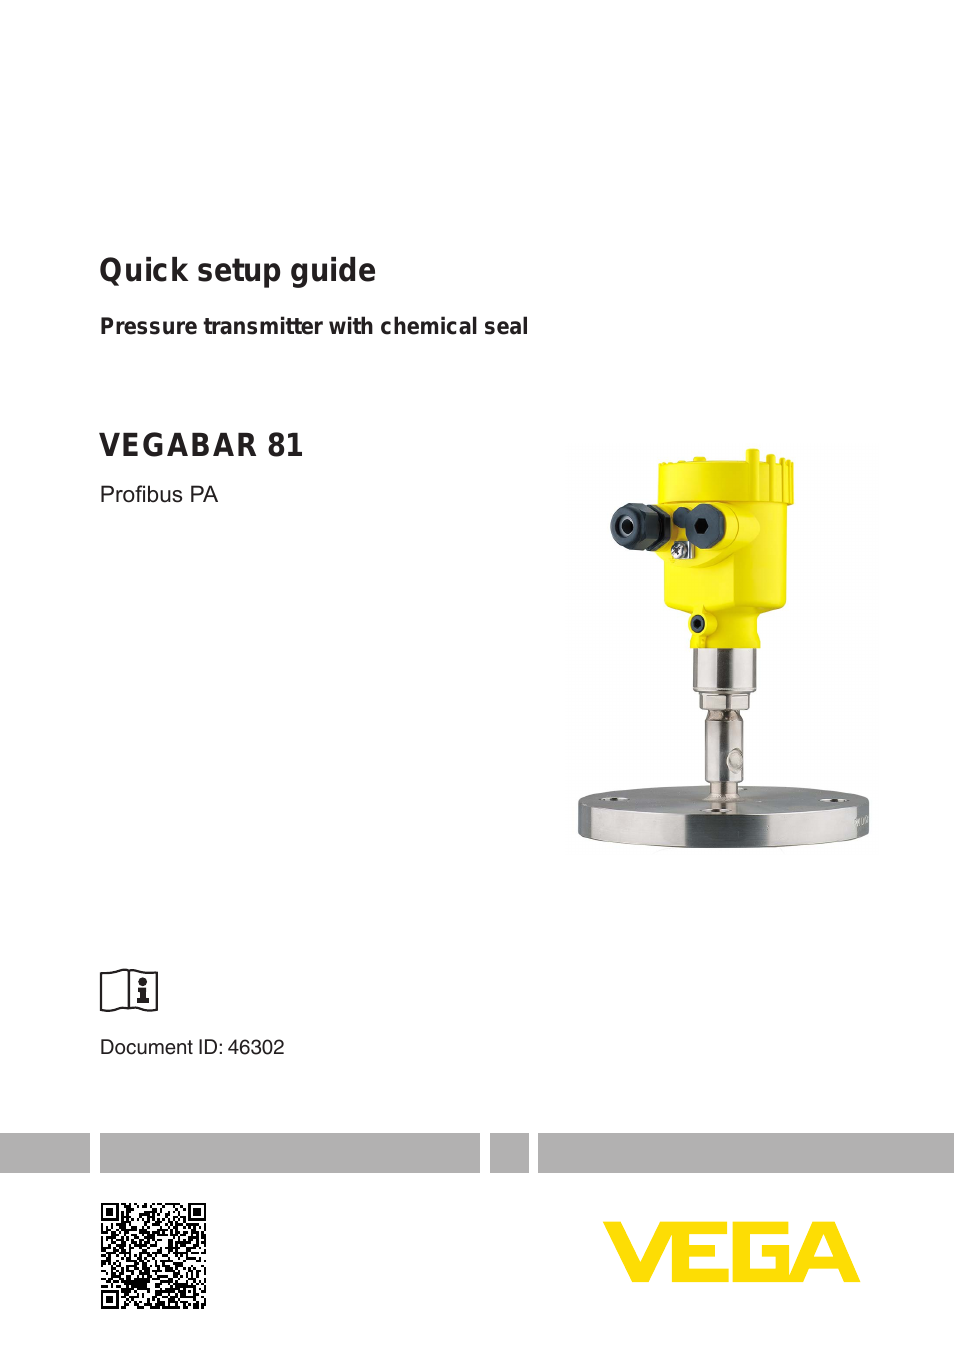 VEGABAR 81 Profibus PA - Quick setup guide